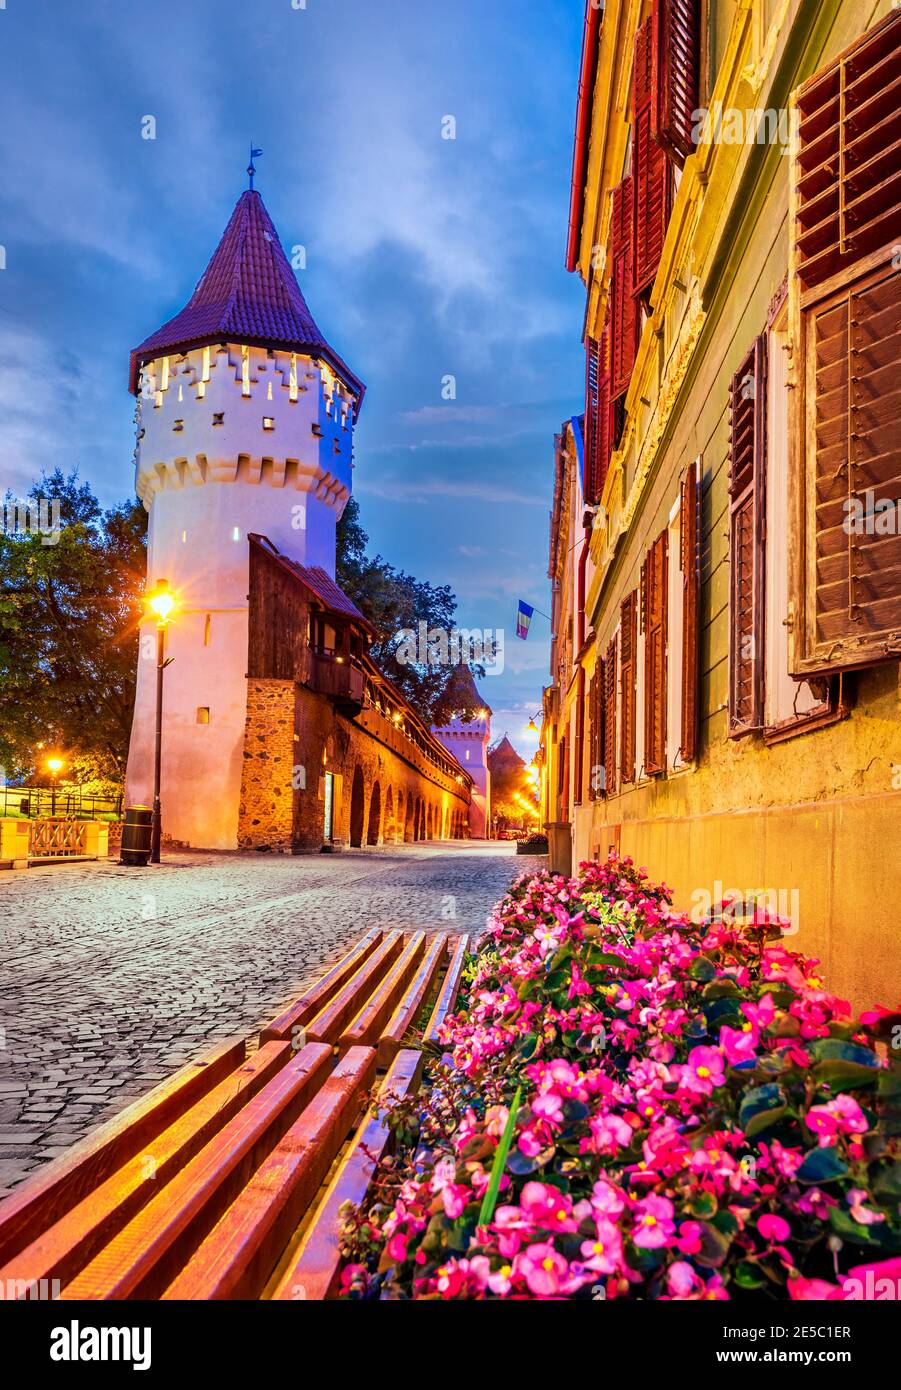 Sibiu, Hermannstadt in Transylvania, … – License image – 70315887 ❘  lookphotos